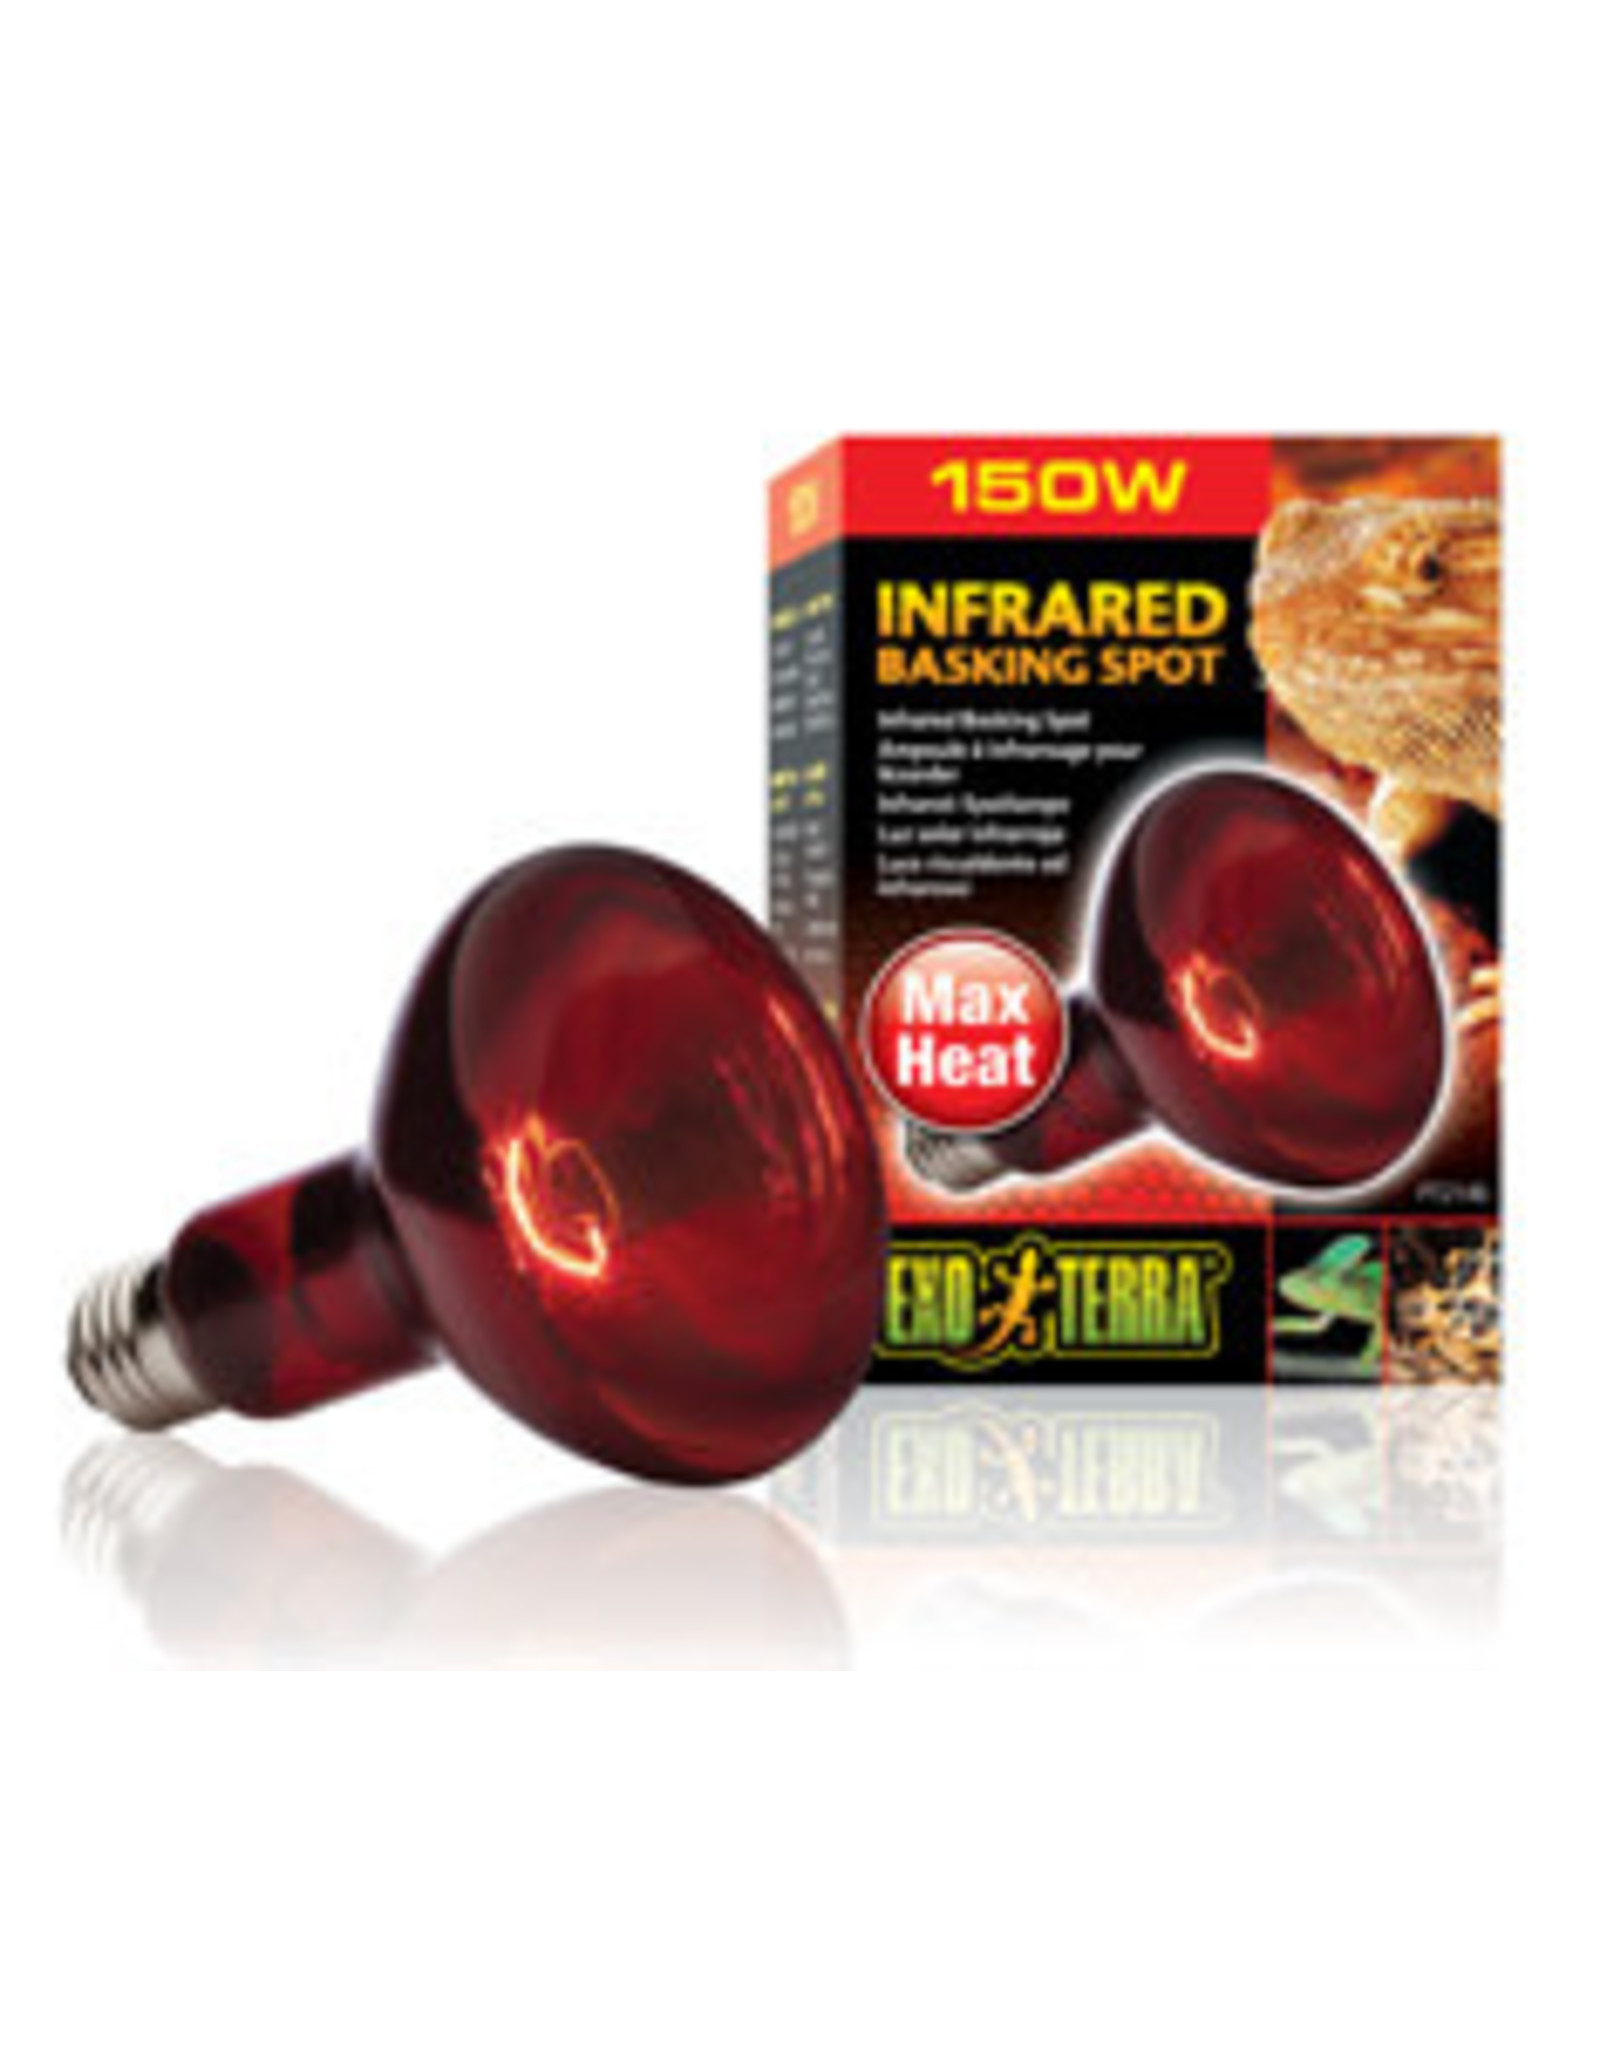 Exo Terra Infrared Heat Bulb 150W